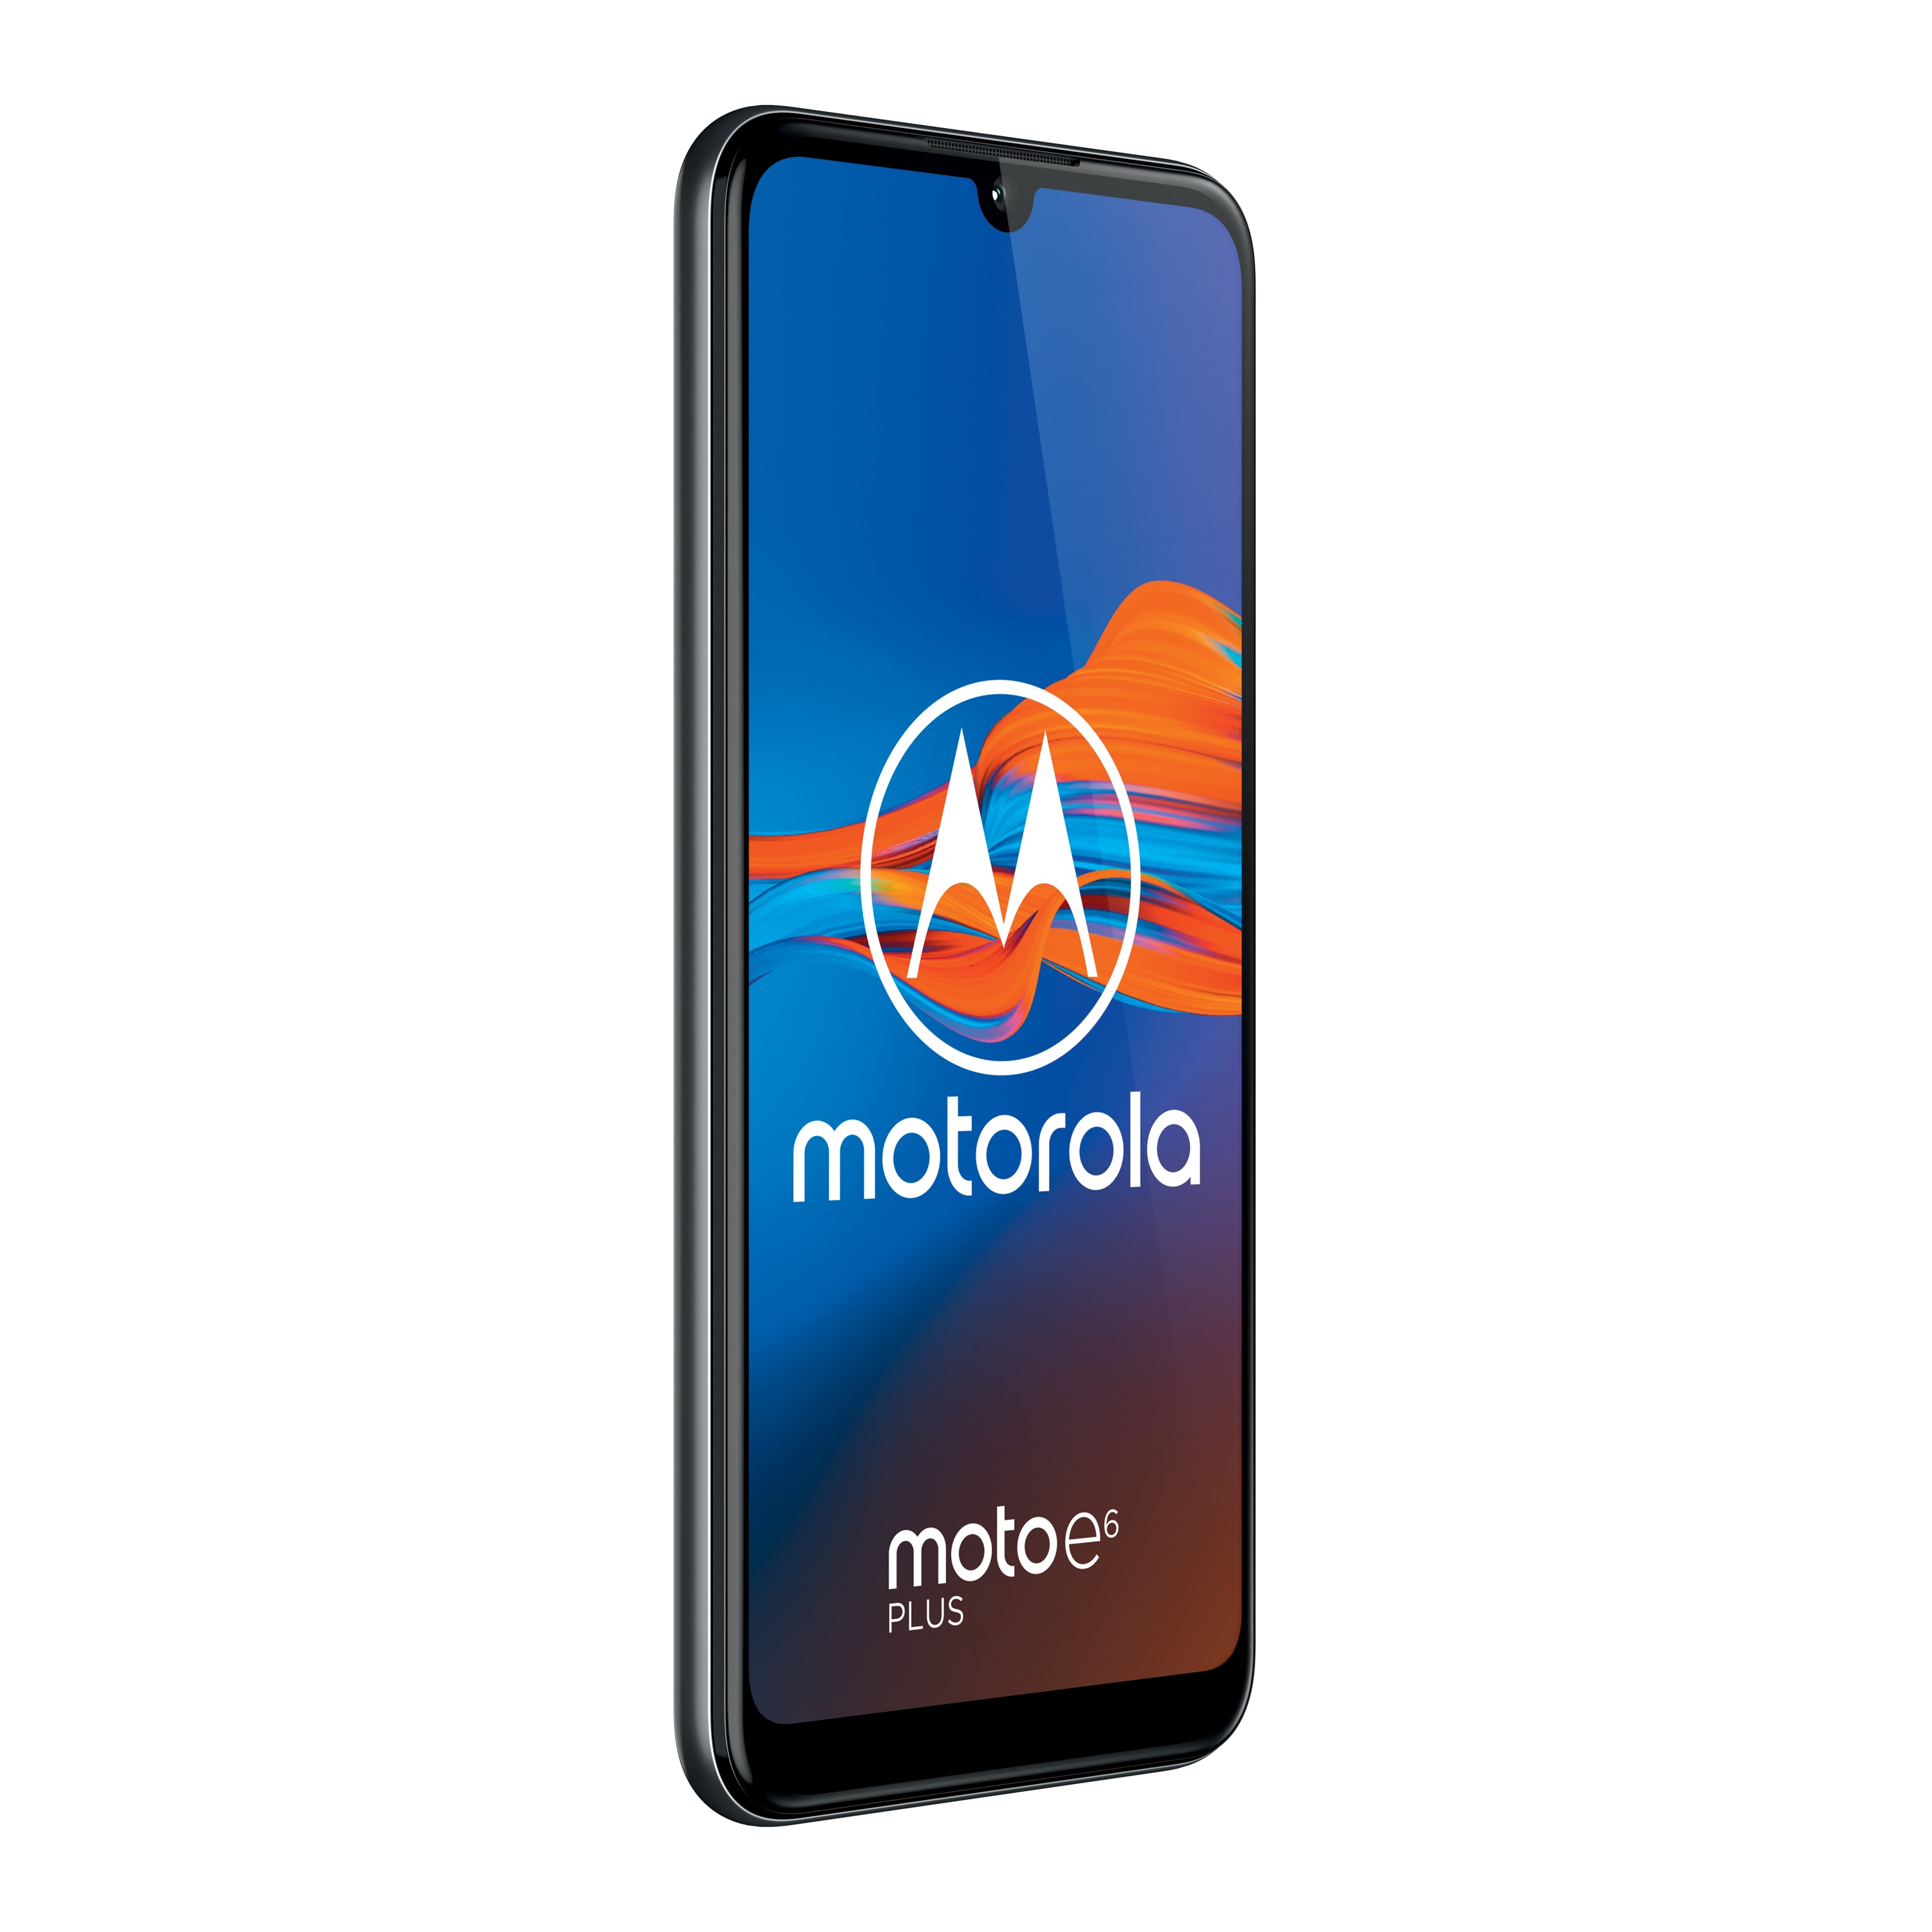 MOTOROLA Moto e6 Plus, 15,5 cm (6,1''), HD+ Display, Android™ 9.0 Pie, 32 GB Speicher, 2 GB RAM, Octa-Core Prozessor, Dual-SIM, LTE